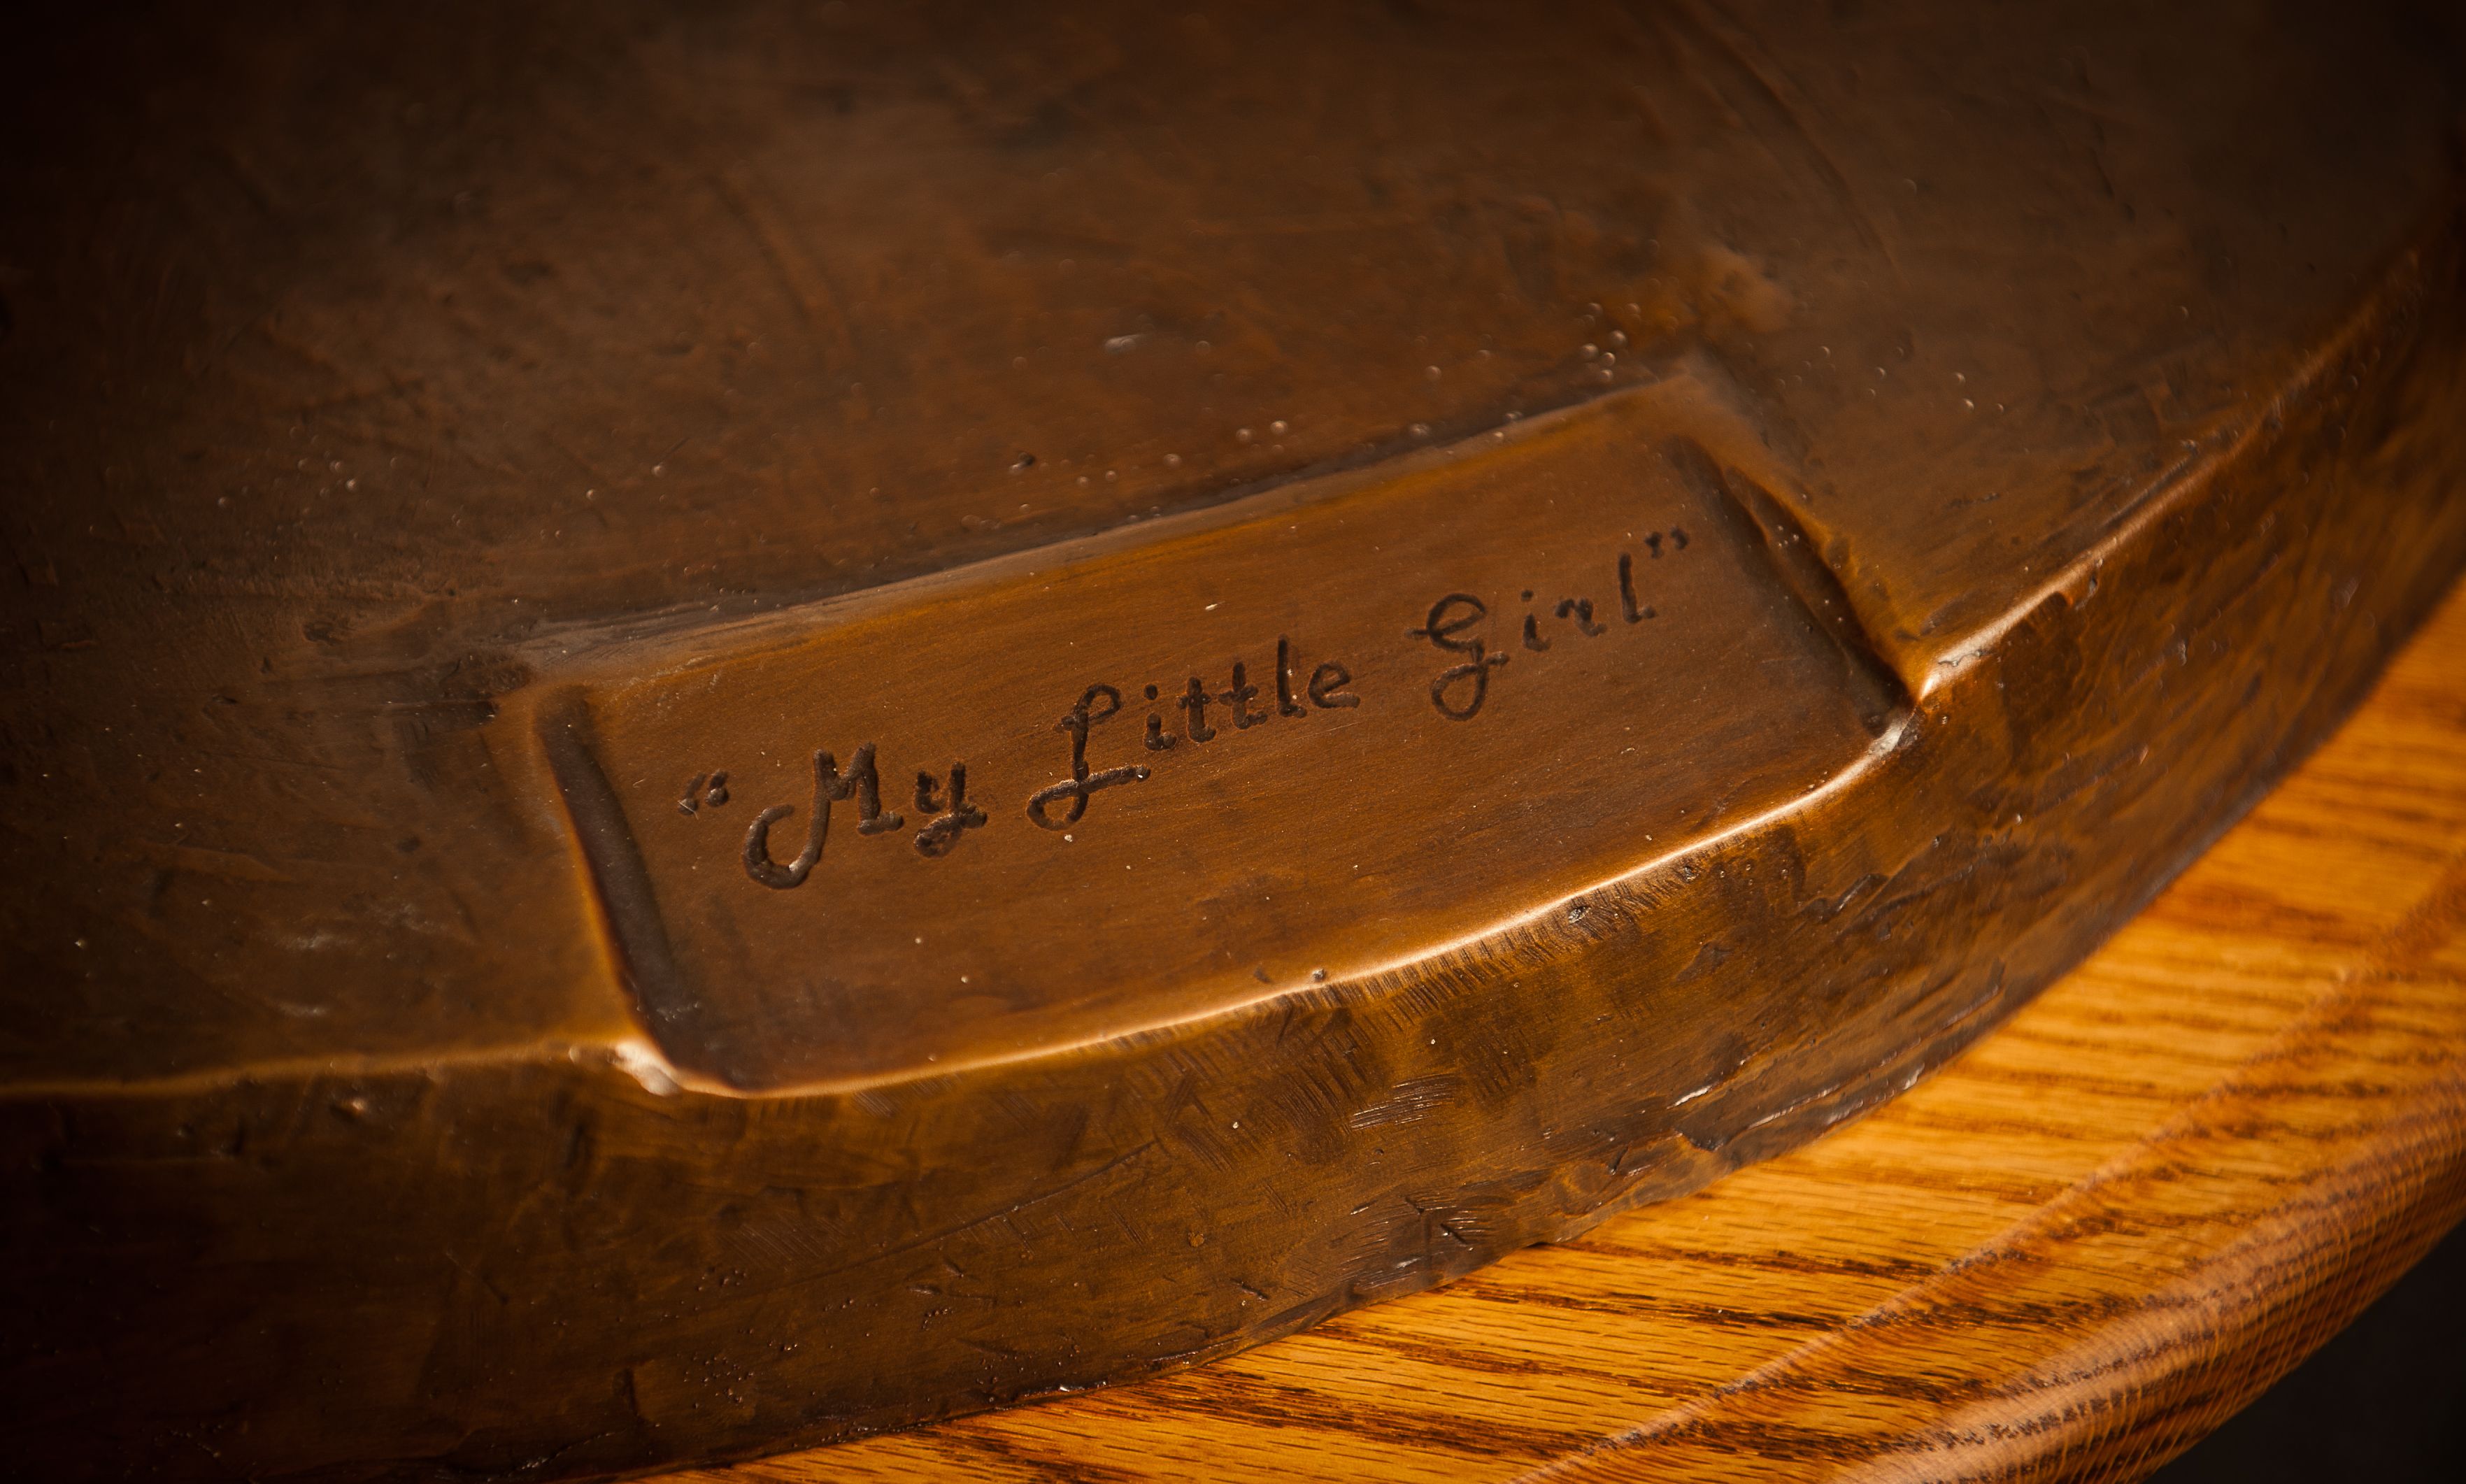 "My little girl" inscription